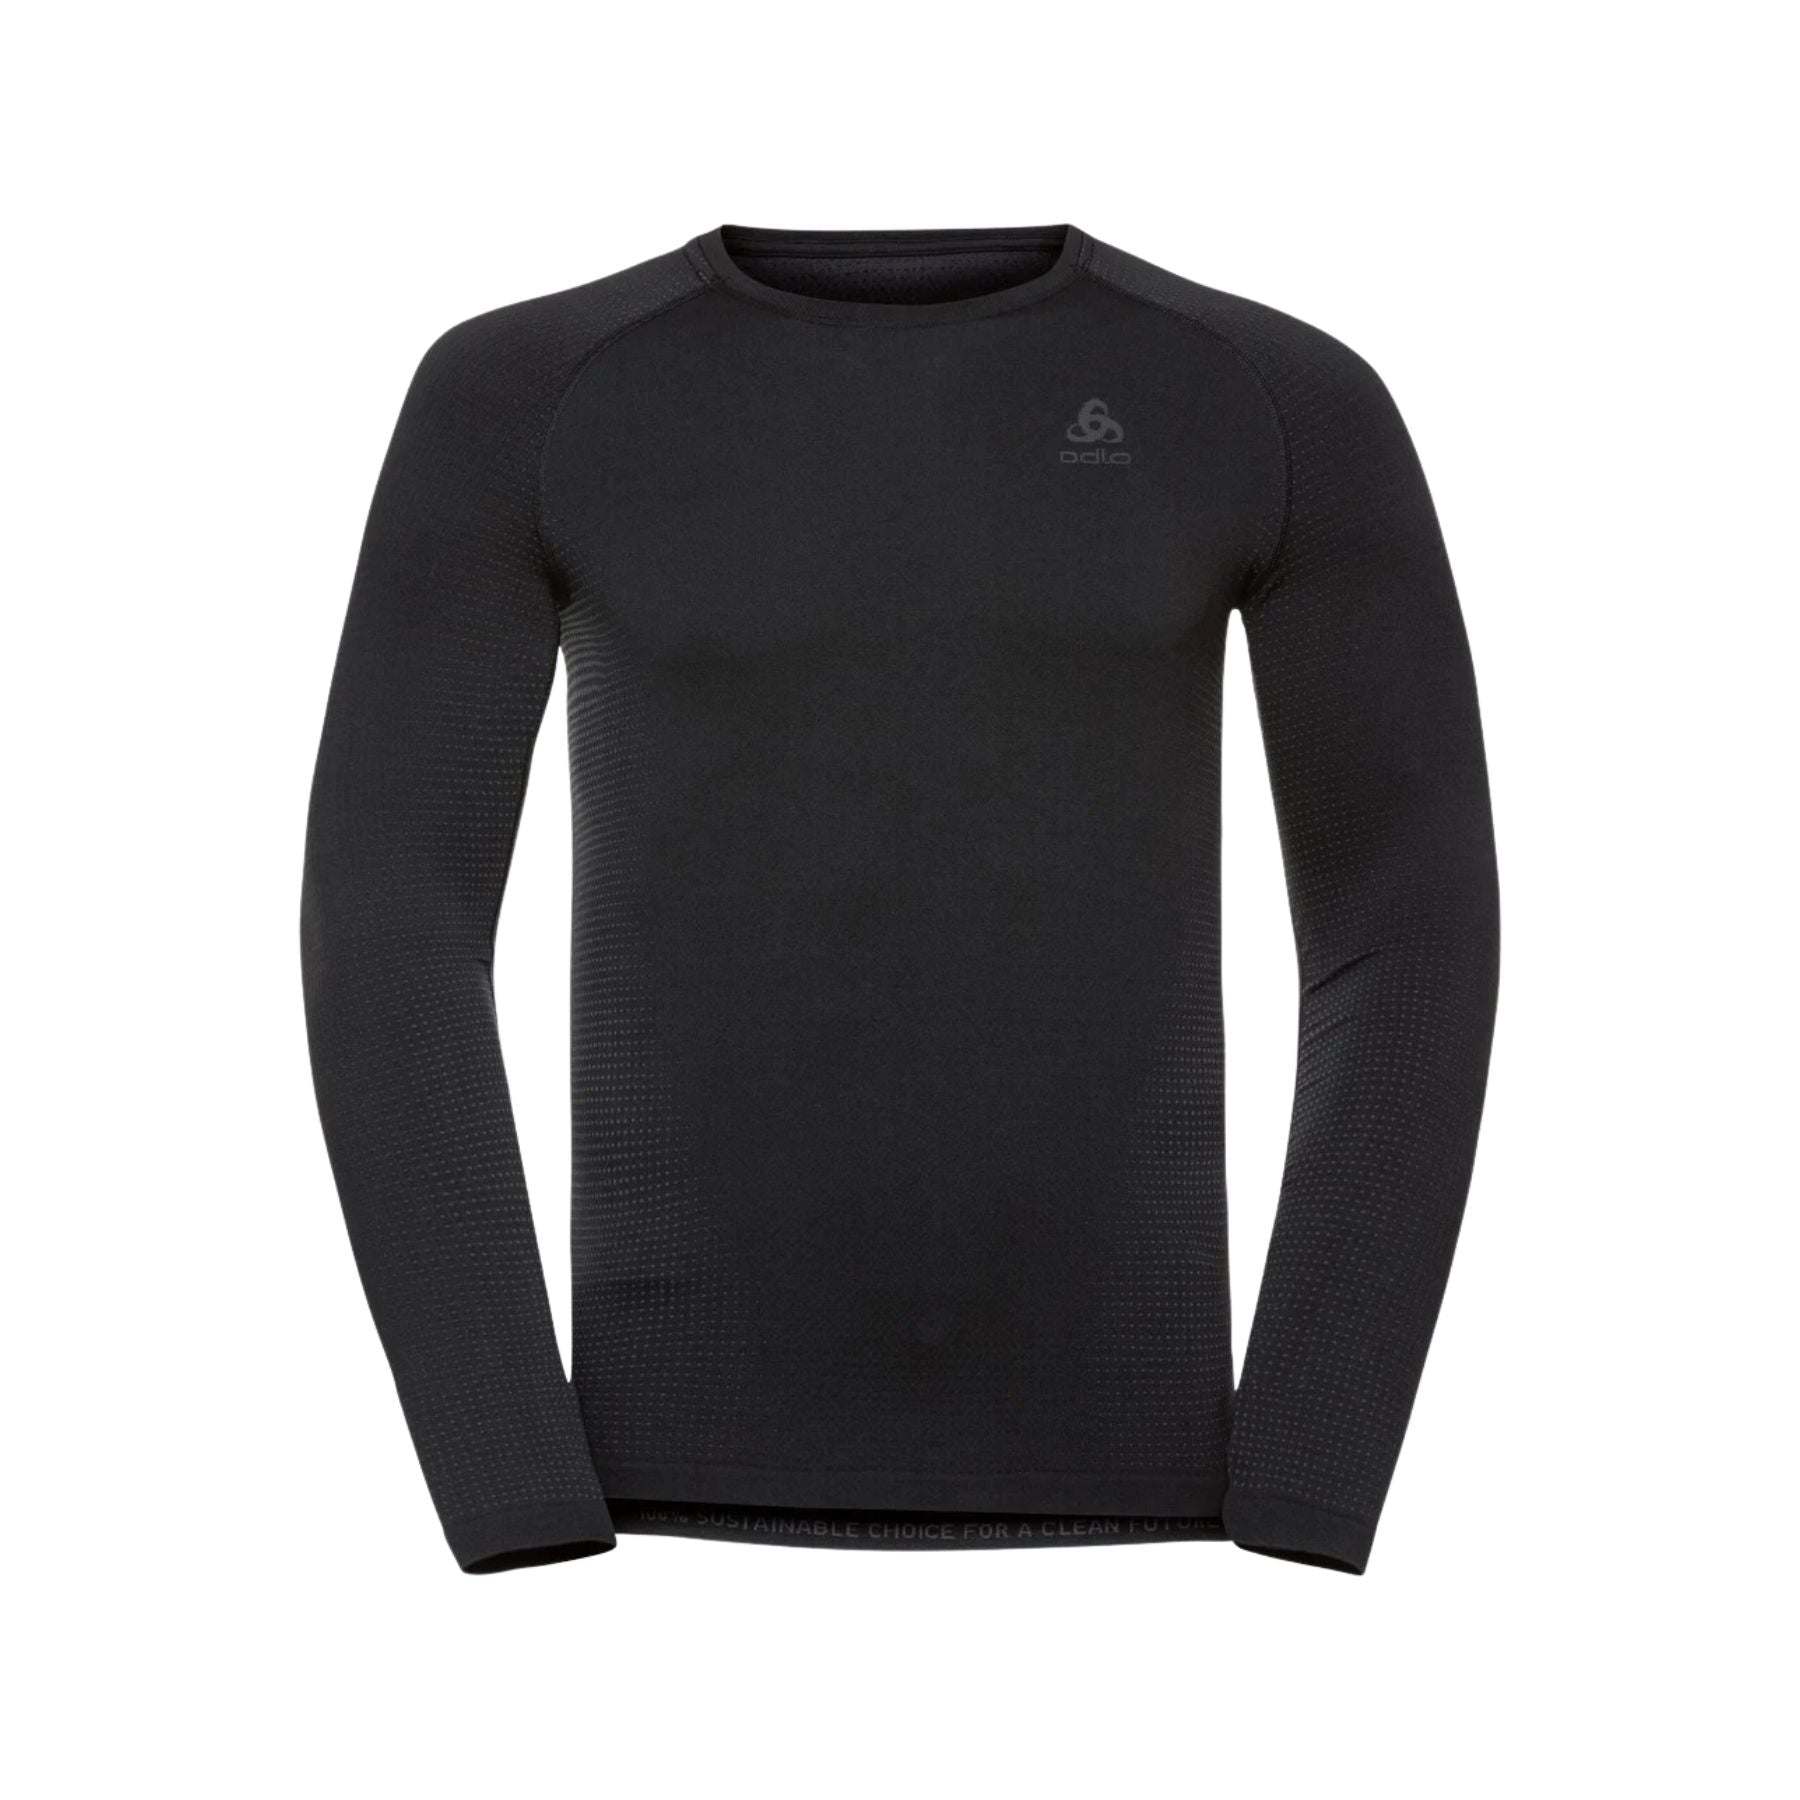 Odlo Men's Performance Warm Base Layer Top in Black/Graphite Grey